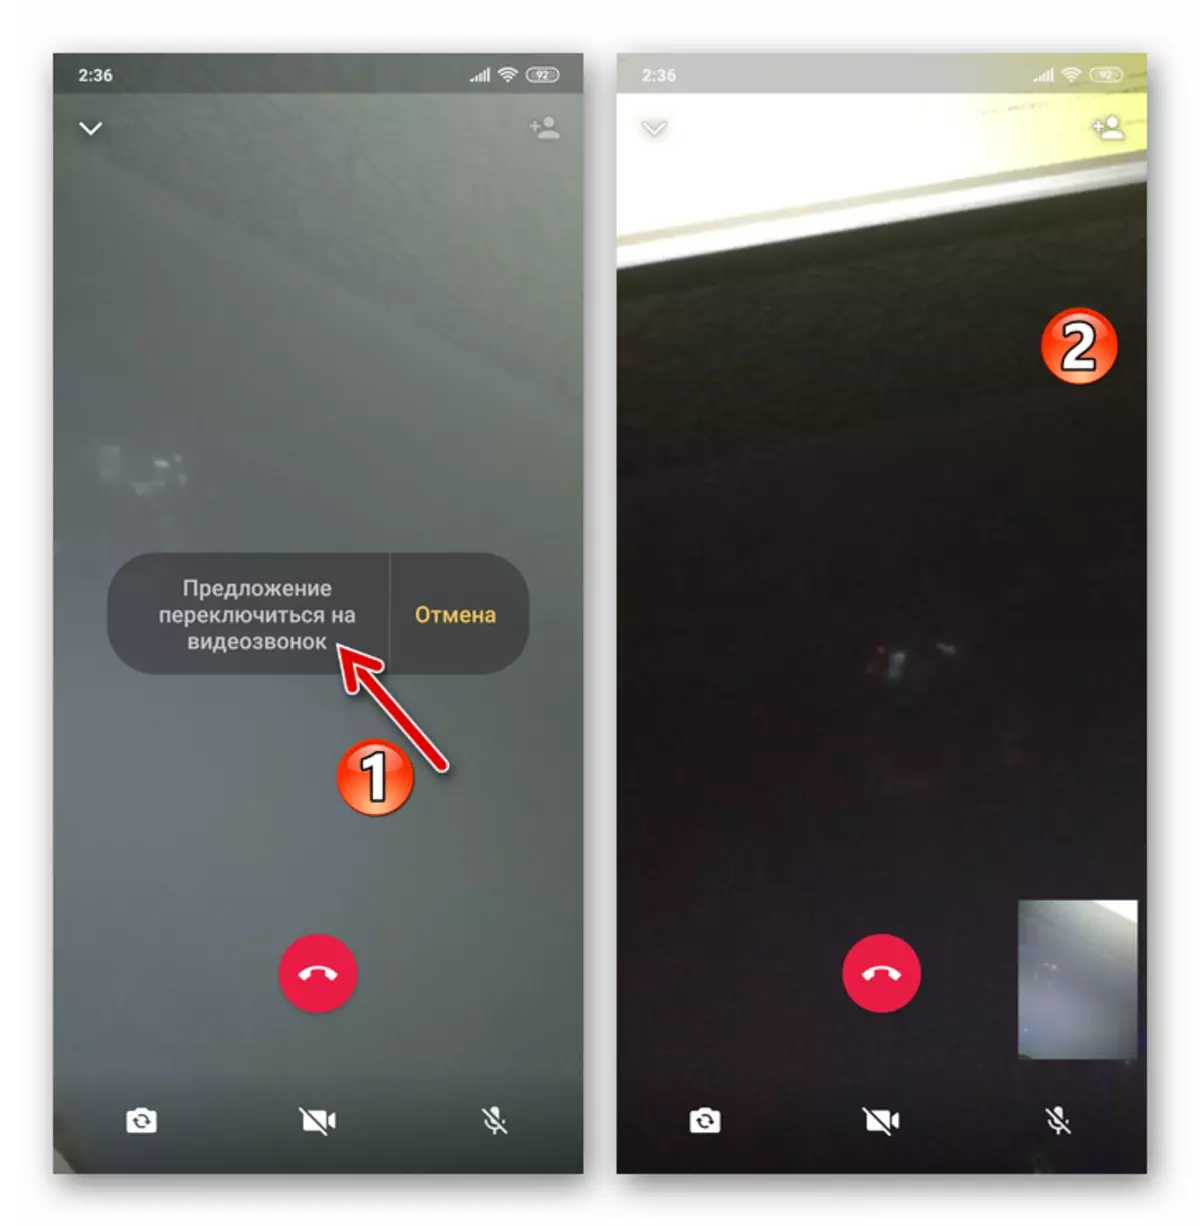 Whatsapp עבור אנדרואיד החלפת קישור וידאו בתהליך של audiosite